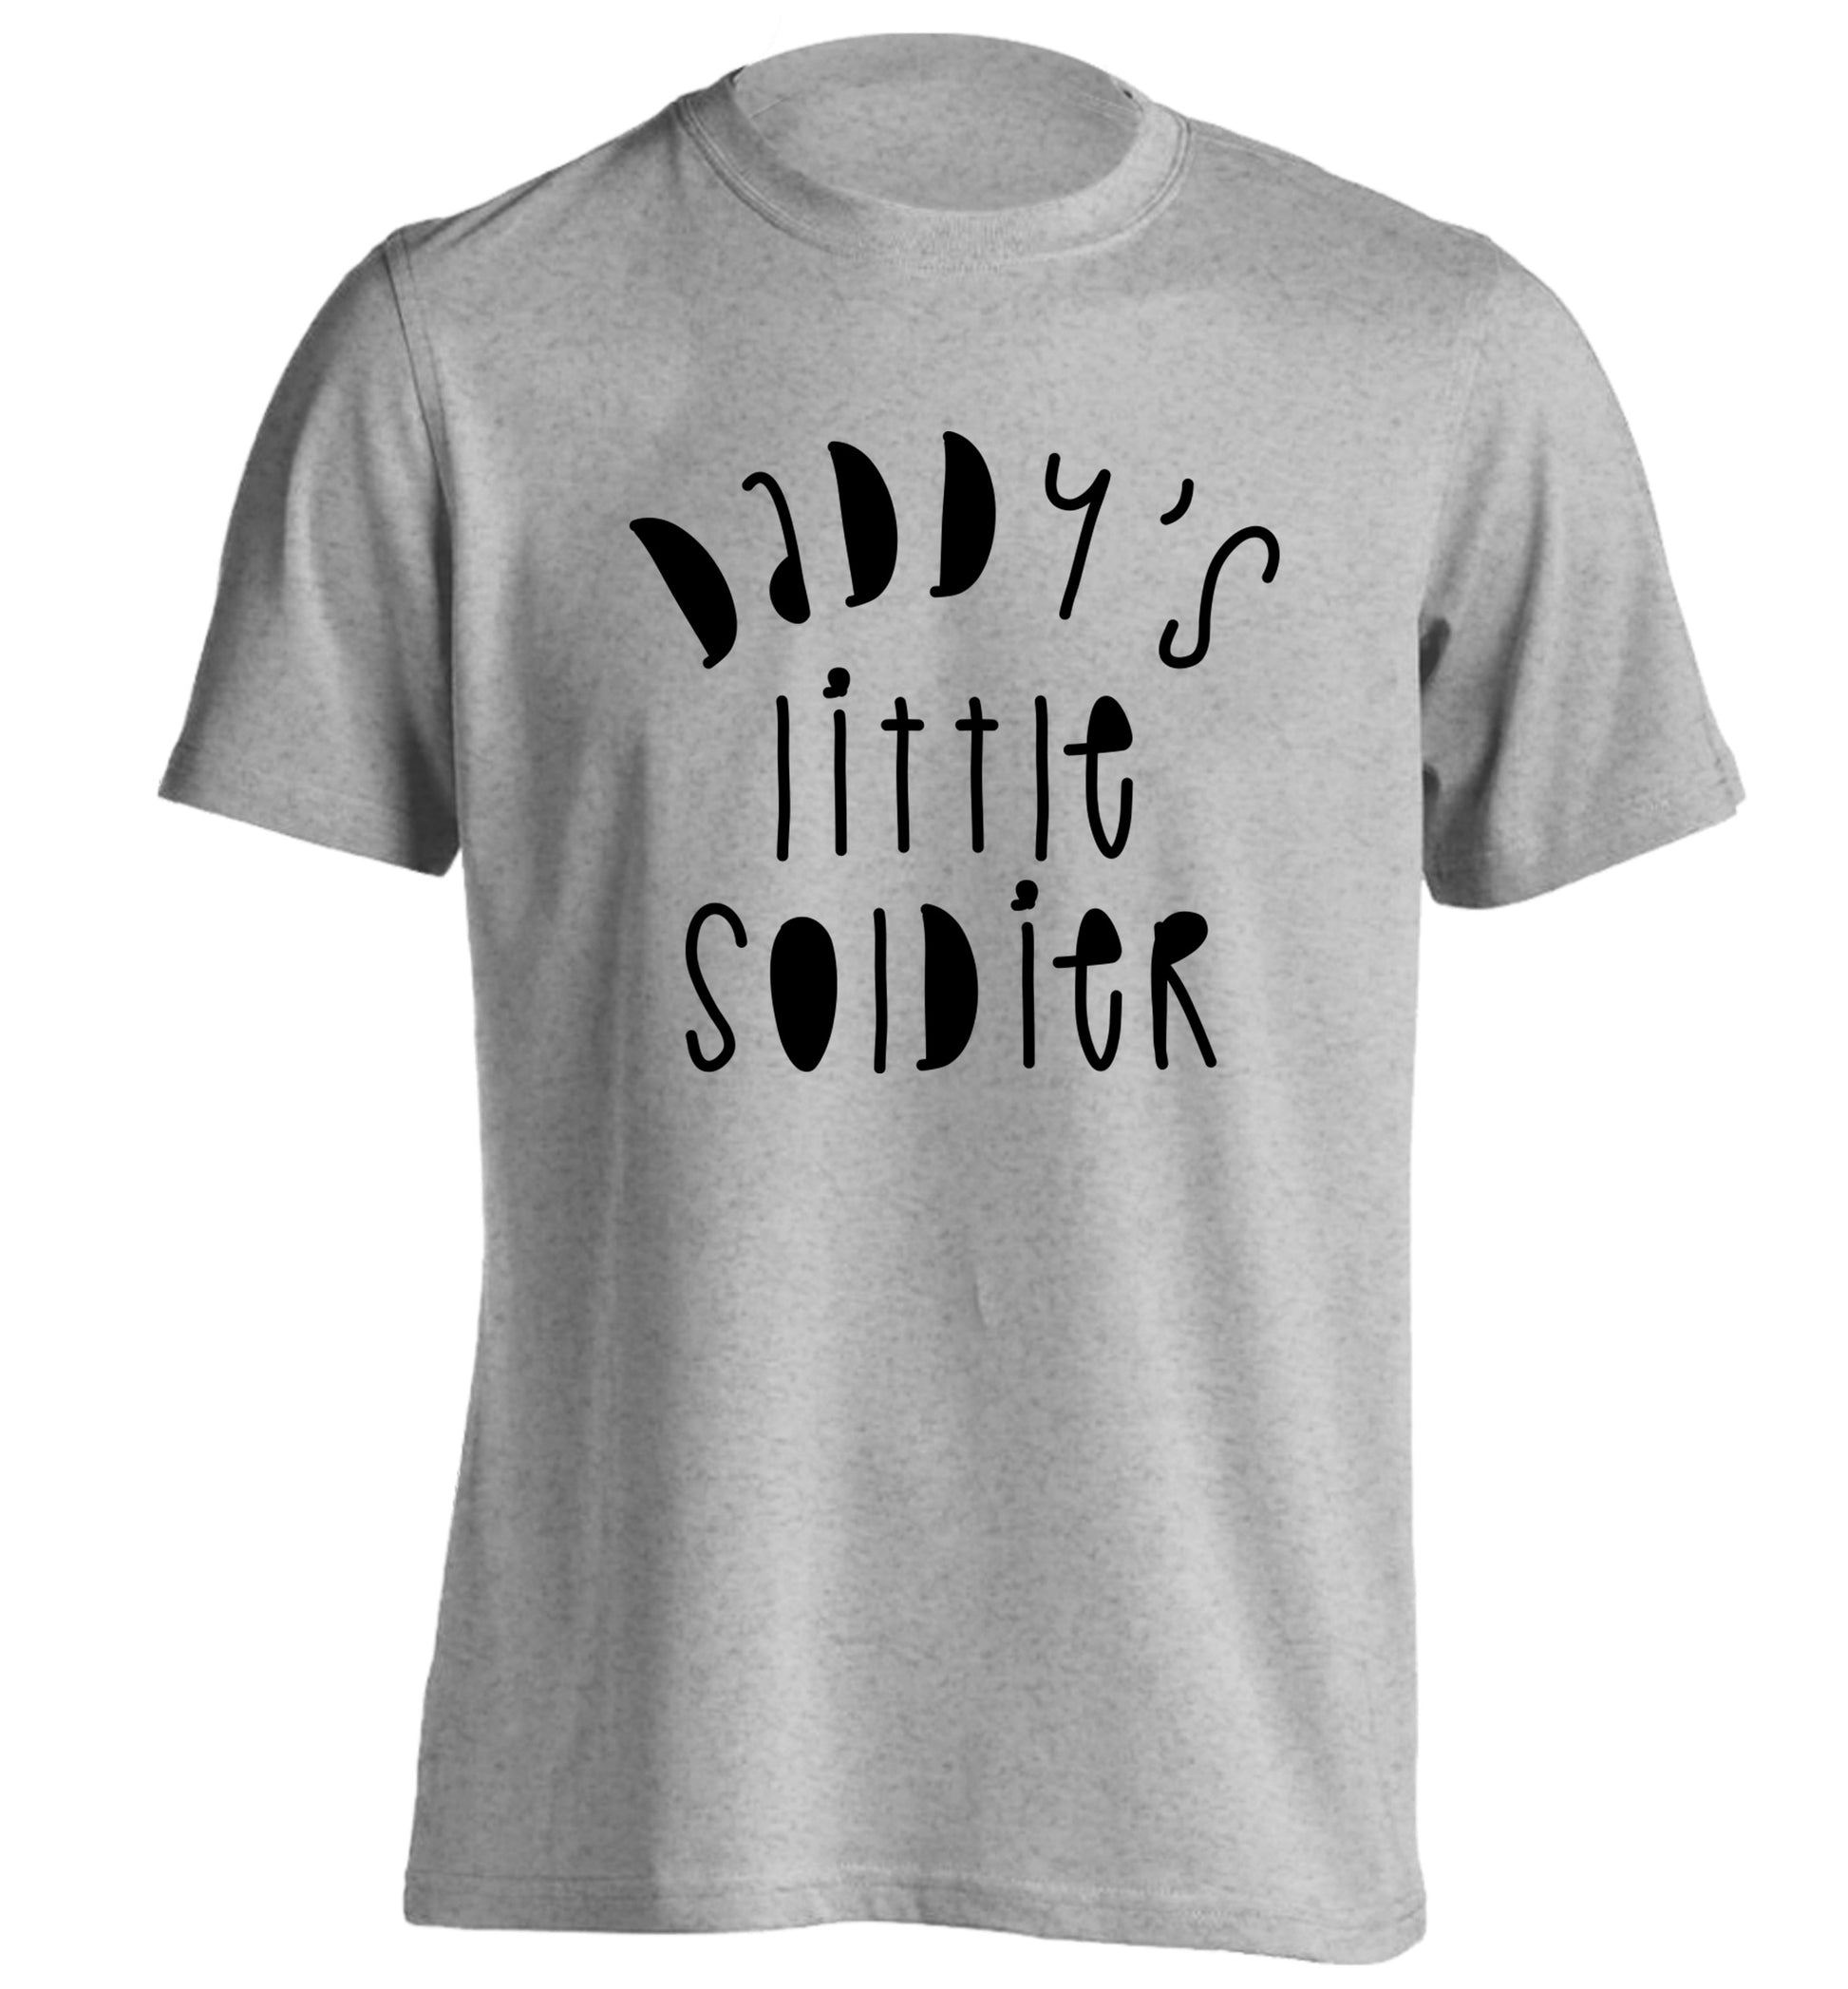 Daddy's little soldier adults unisex grey Tshirt 2XL